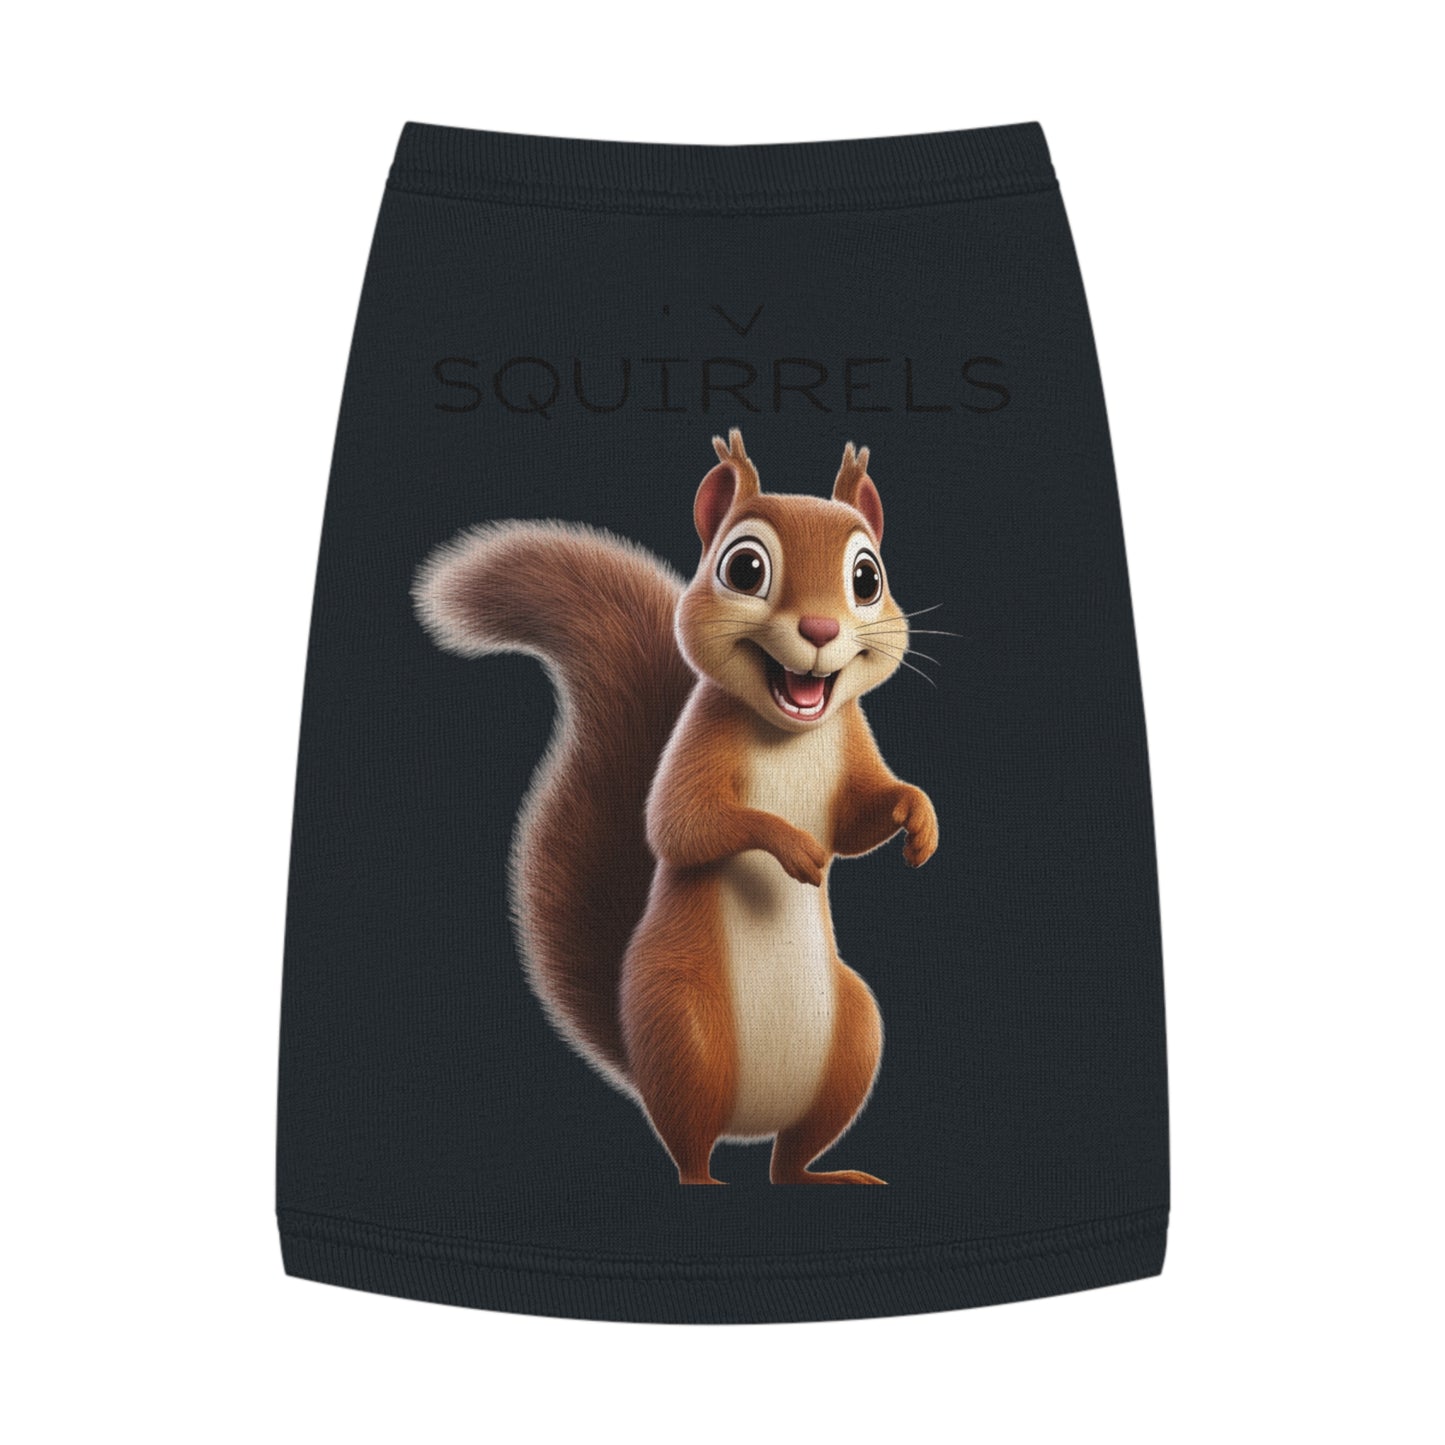 I Love Squirrels" Dog Tank Top